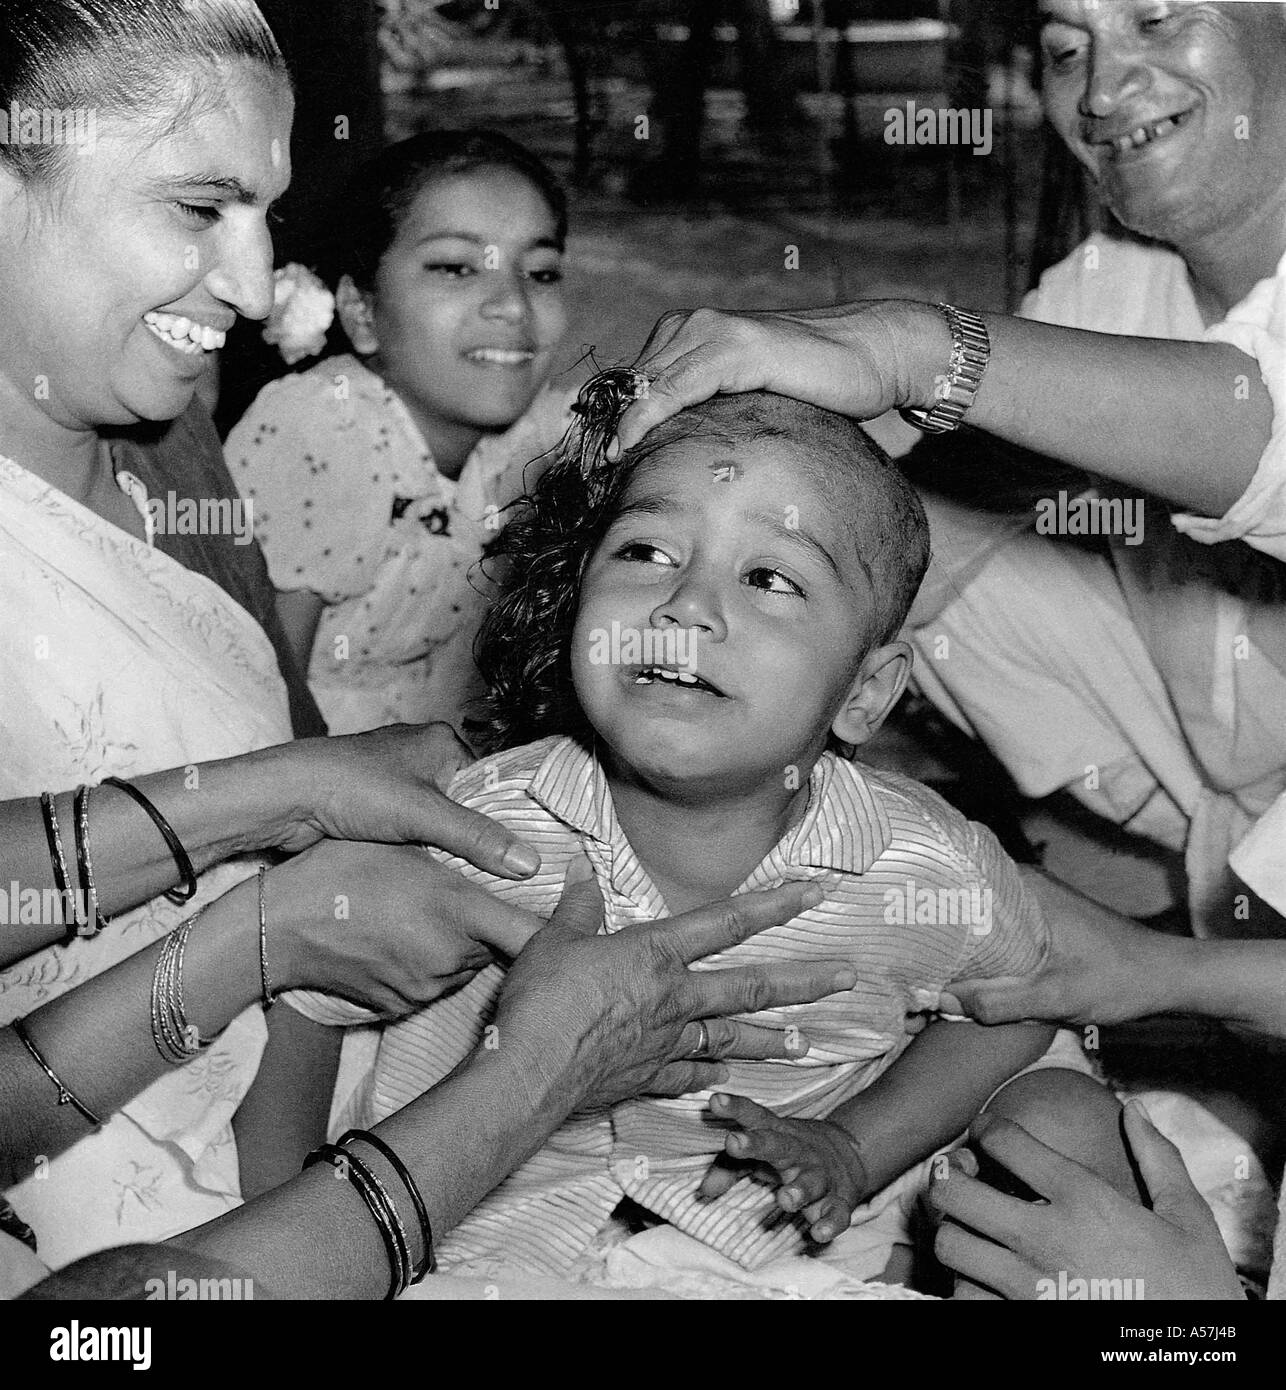 Mundan First Hair Cutting Ceremony of Child Gondal Saurashtra Gujarat India  1961 Stock Photo - Alamy